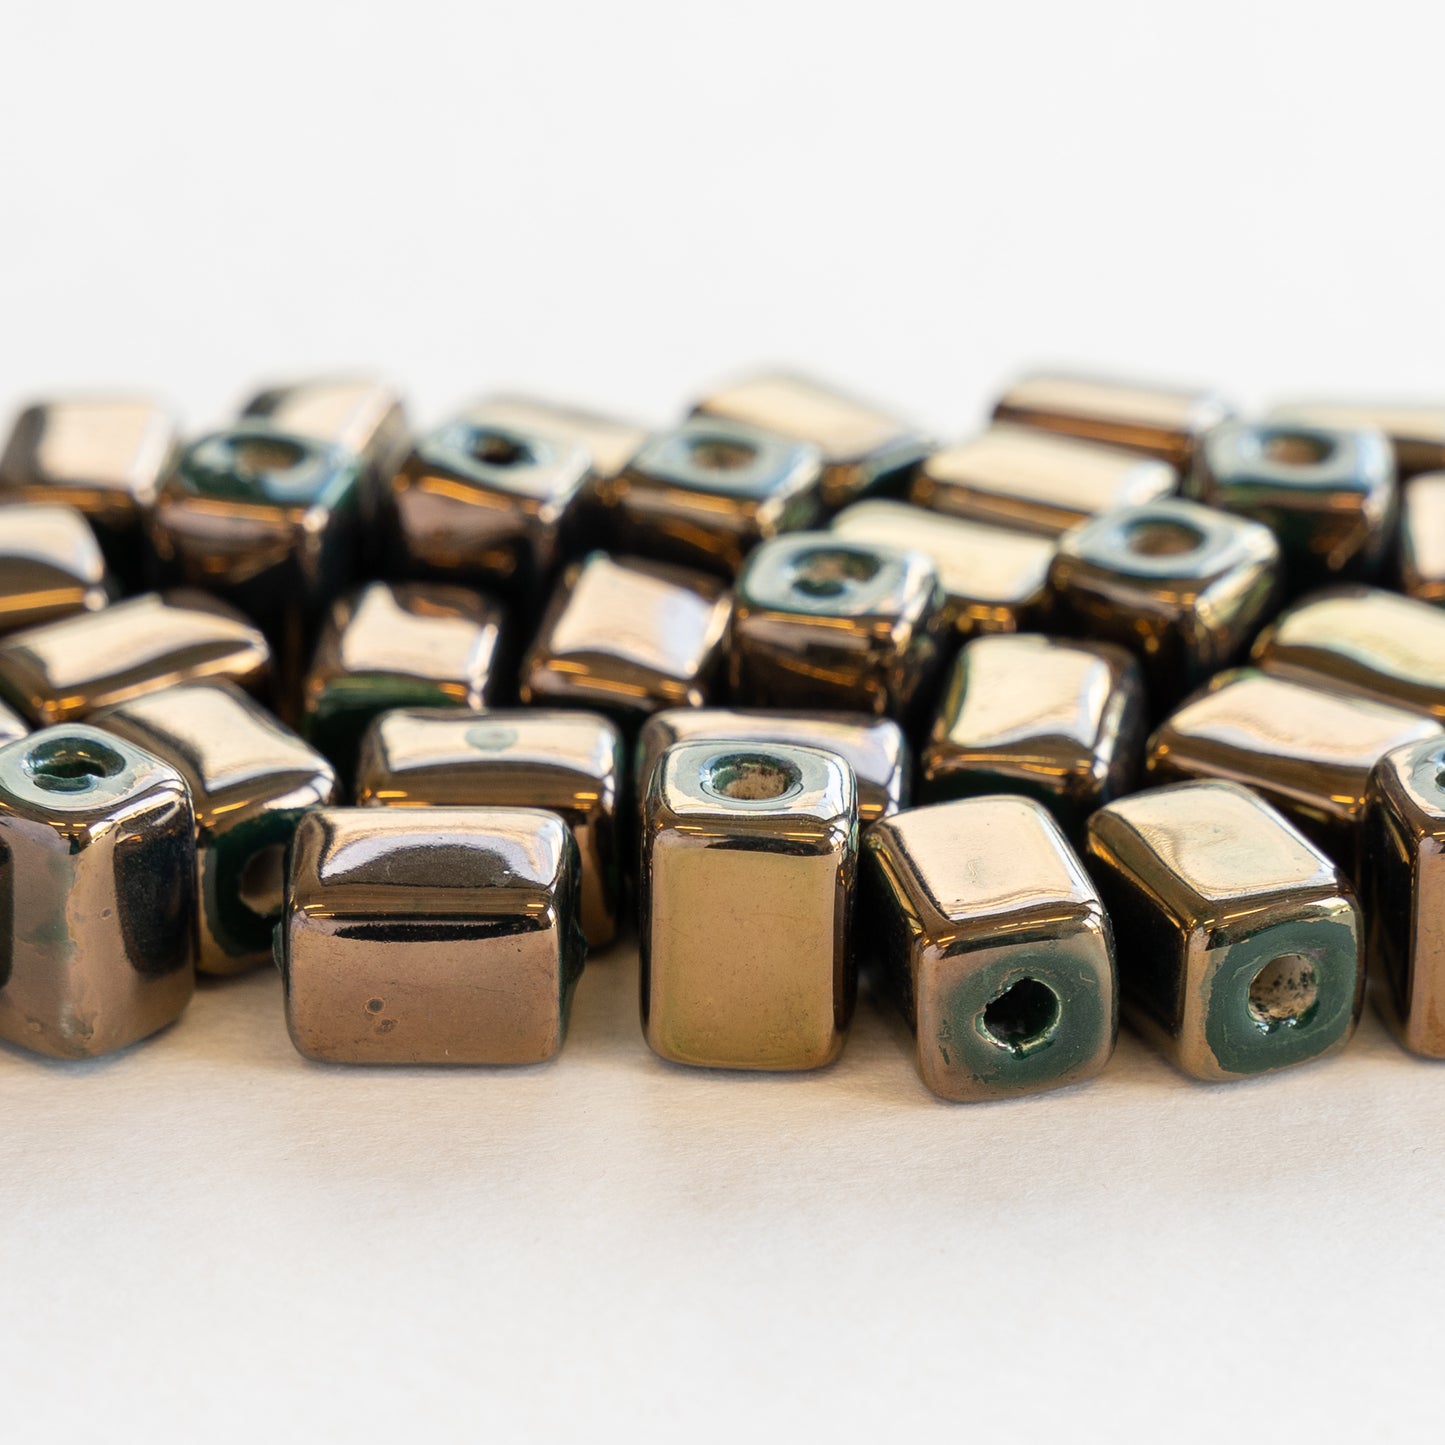 9x12mm Shiny Glazed Ceramic Rectangle Beads - Bronze & Forest Green